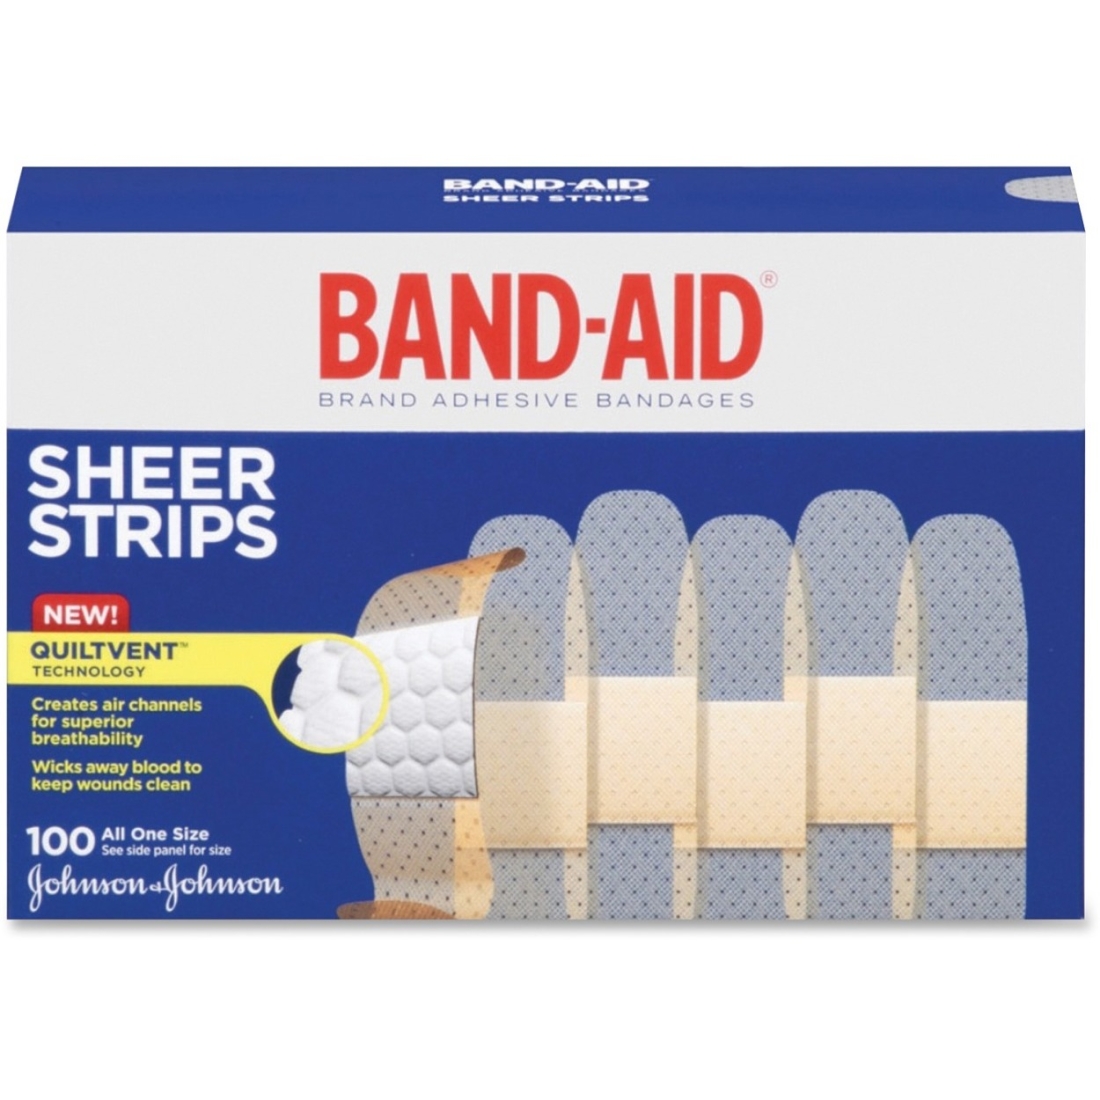 Band-Aid Sheer Adhesive Bandages - image 3 of 3